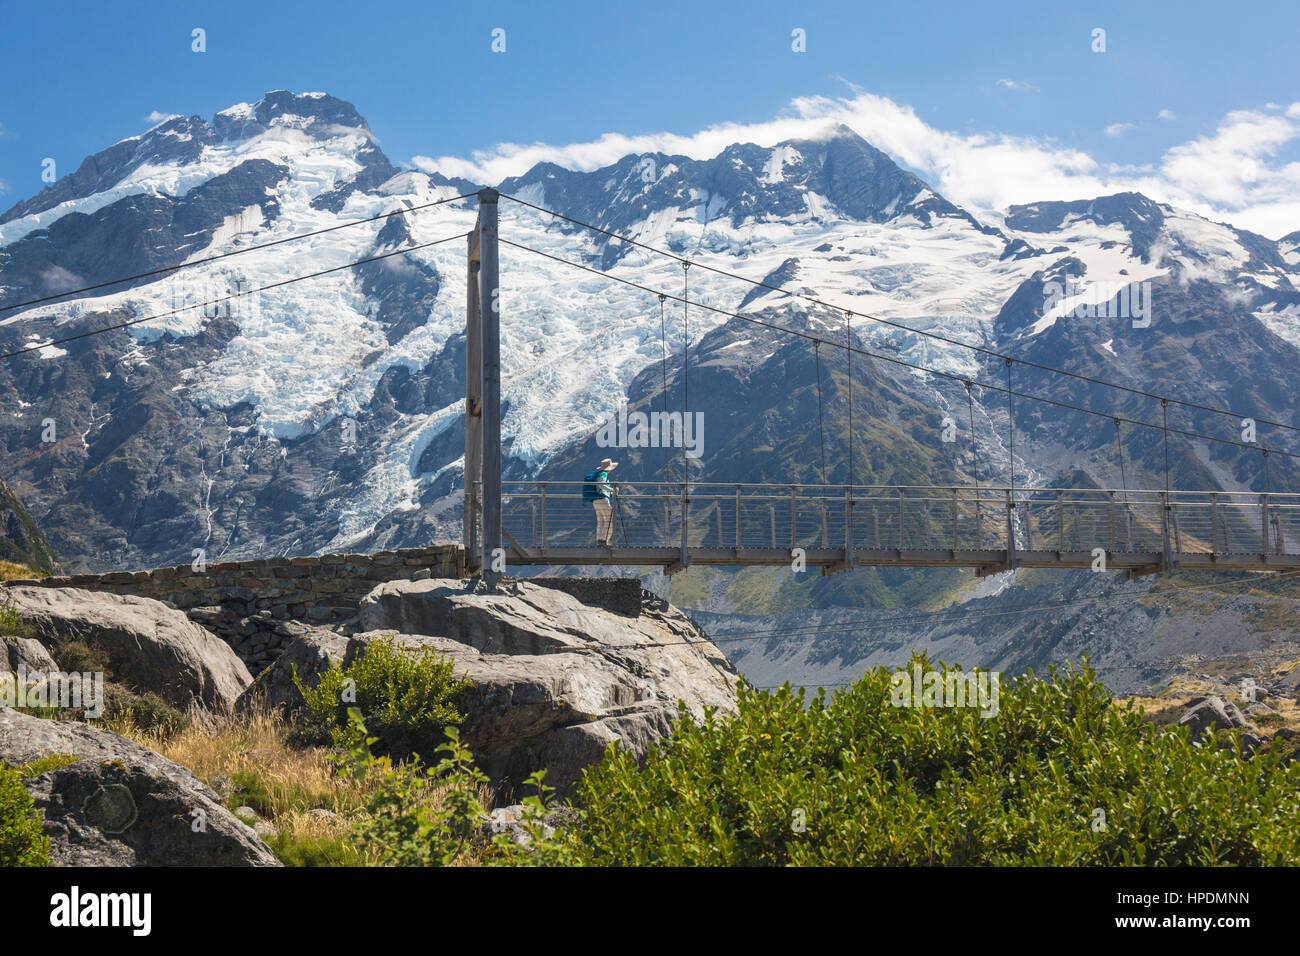 Dal Parco Nazionale Aoraki/Mount Cook, Canterbury, Nuova Zelanda. Escursionista attraversando un ponte sospeso su il Hooker Valley via, Mount Sefton in background. Foto Stock